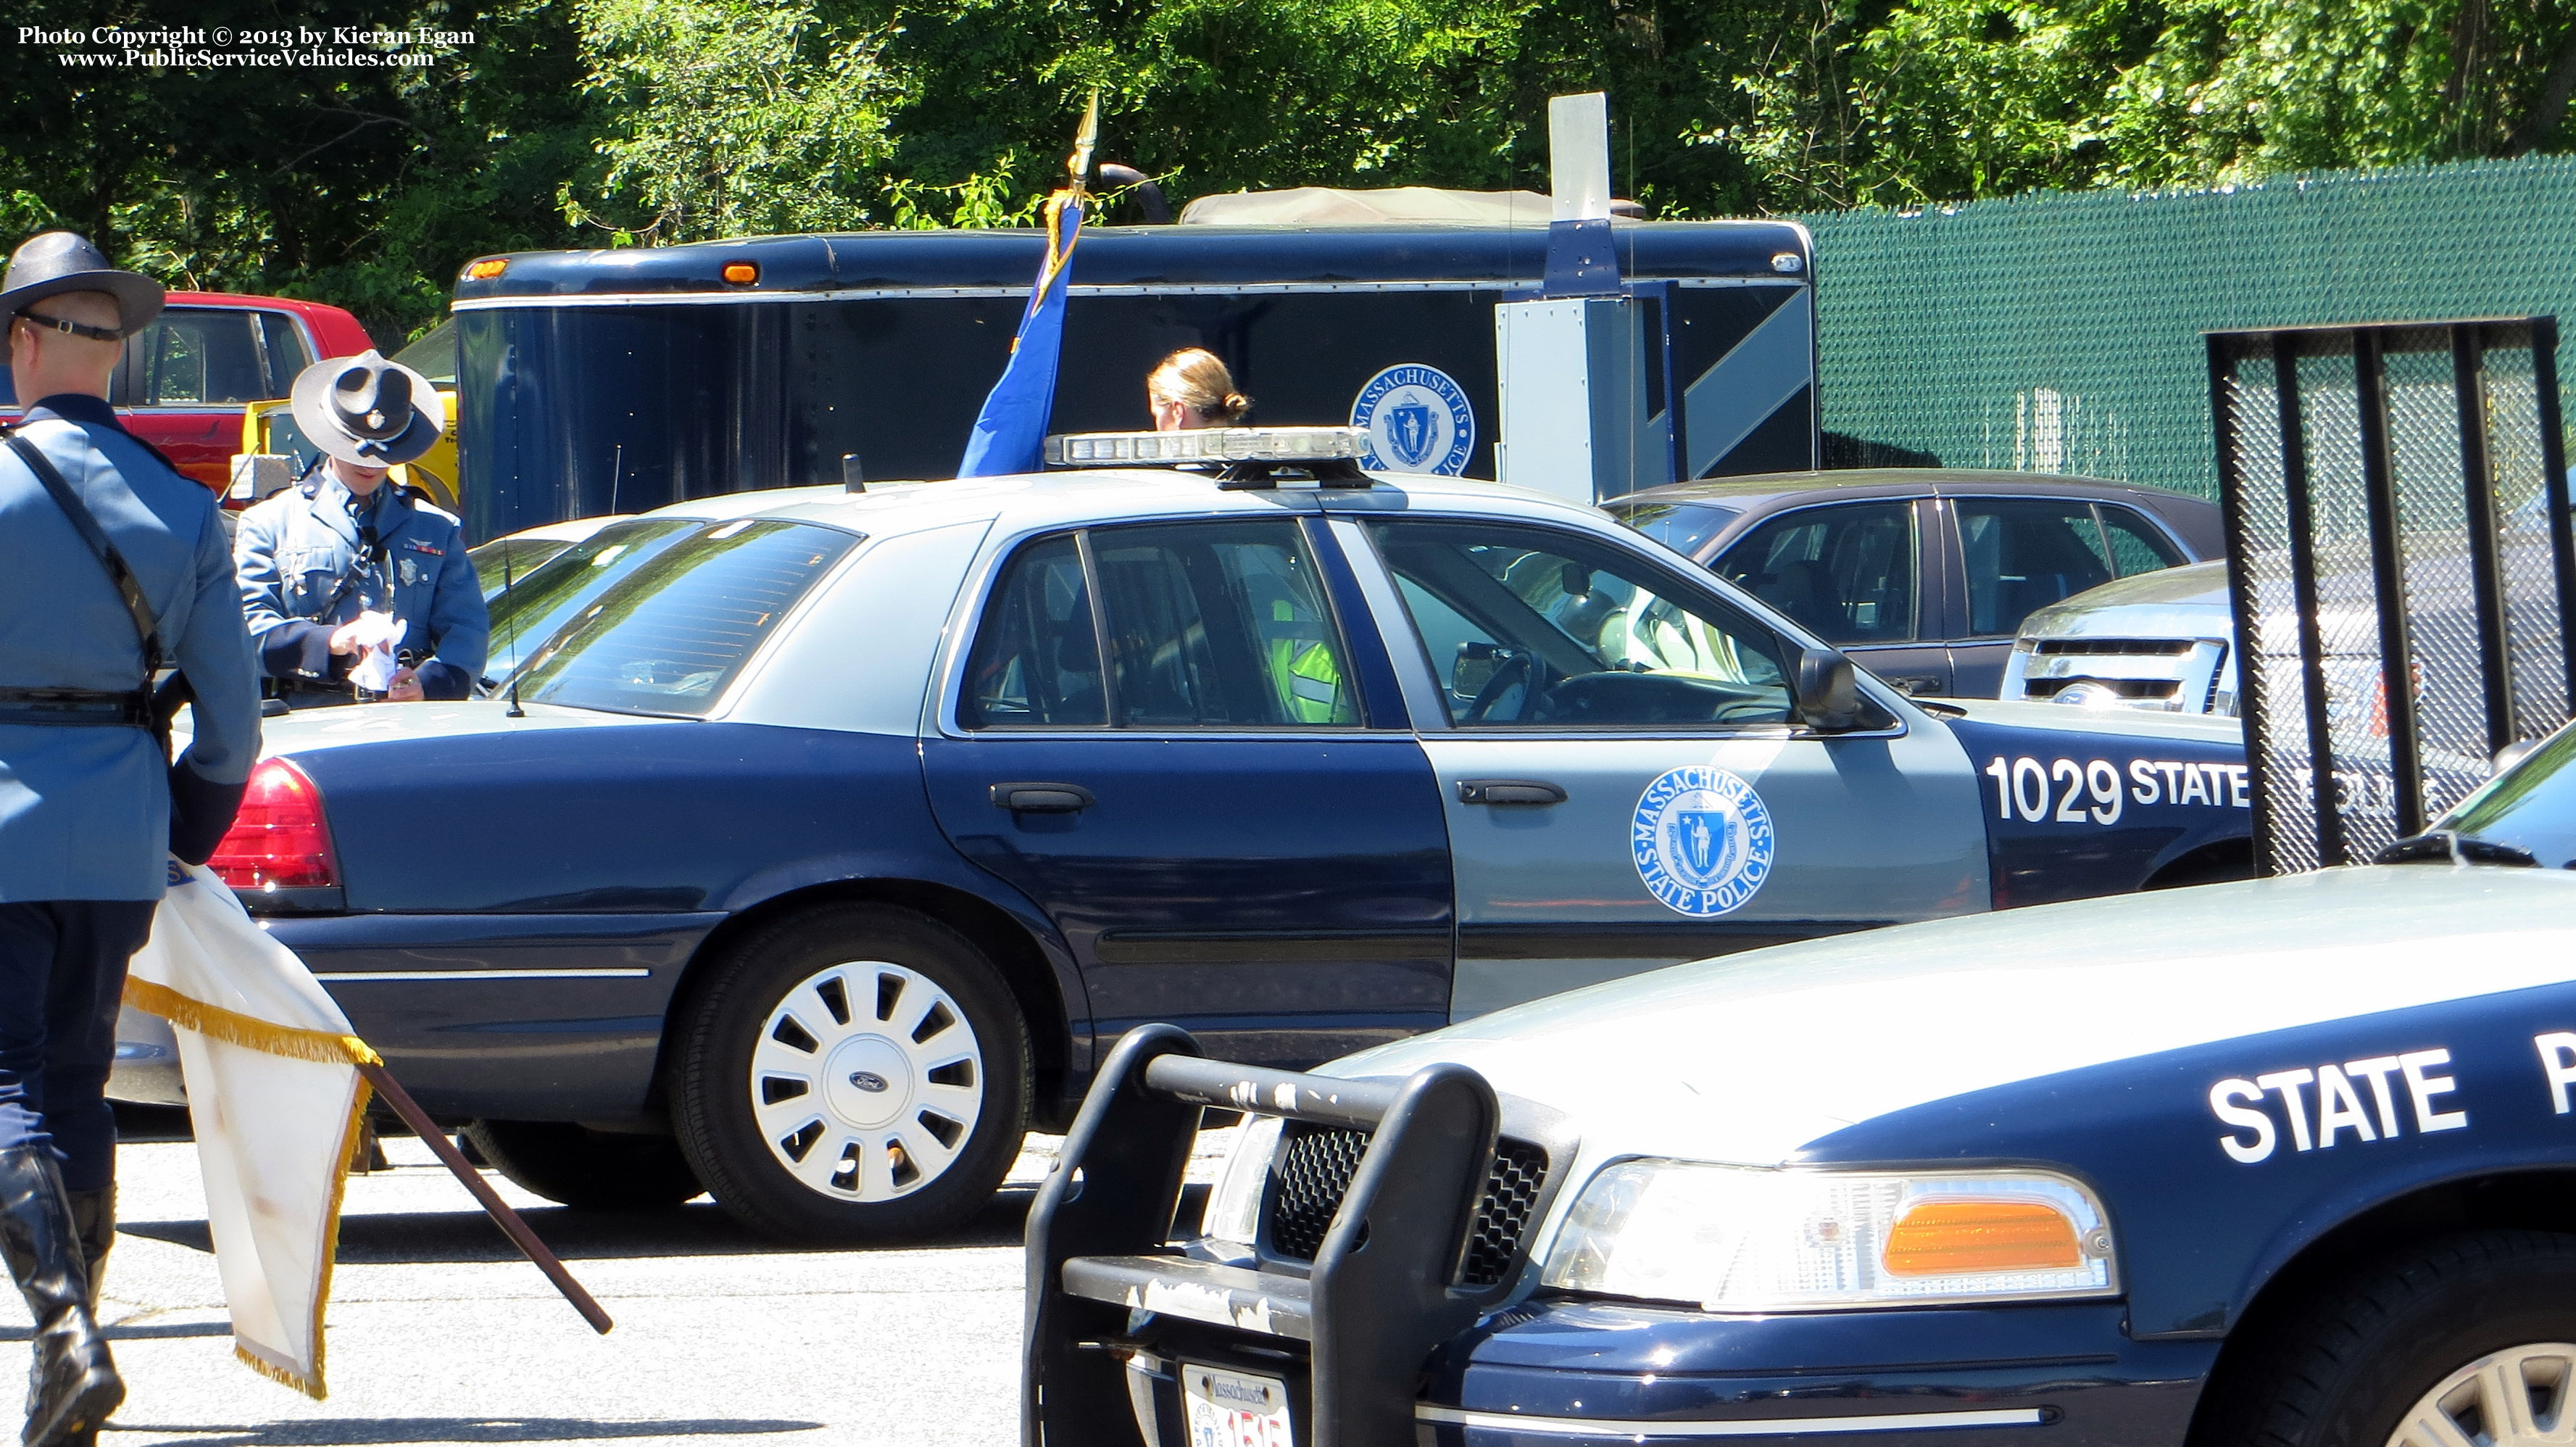 A photo  of Massachusetts State Police
            Cruiser 1029, a 2006-2008 Ford Crown Victoria Police Interceptor             taken by Kieran Egan